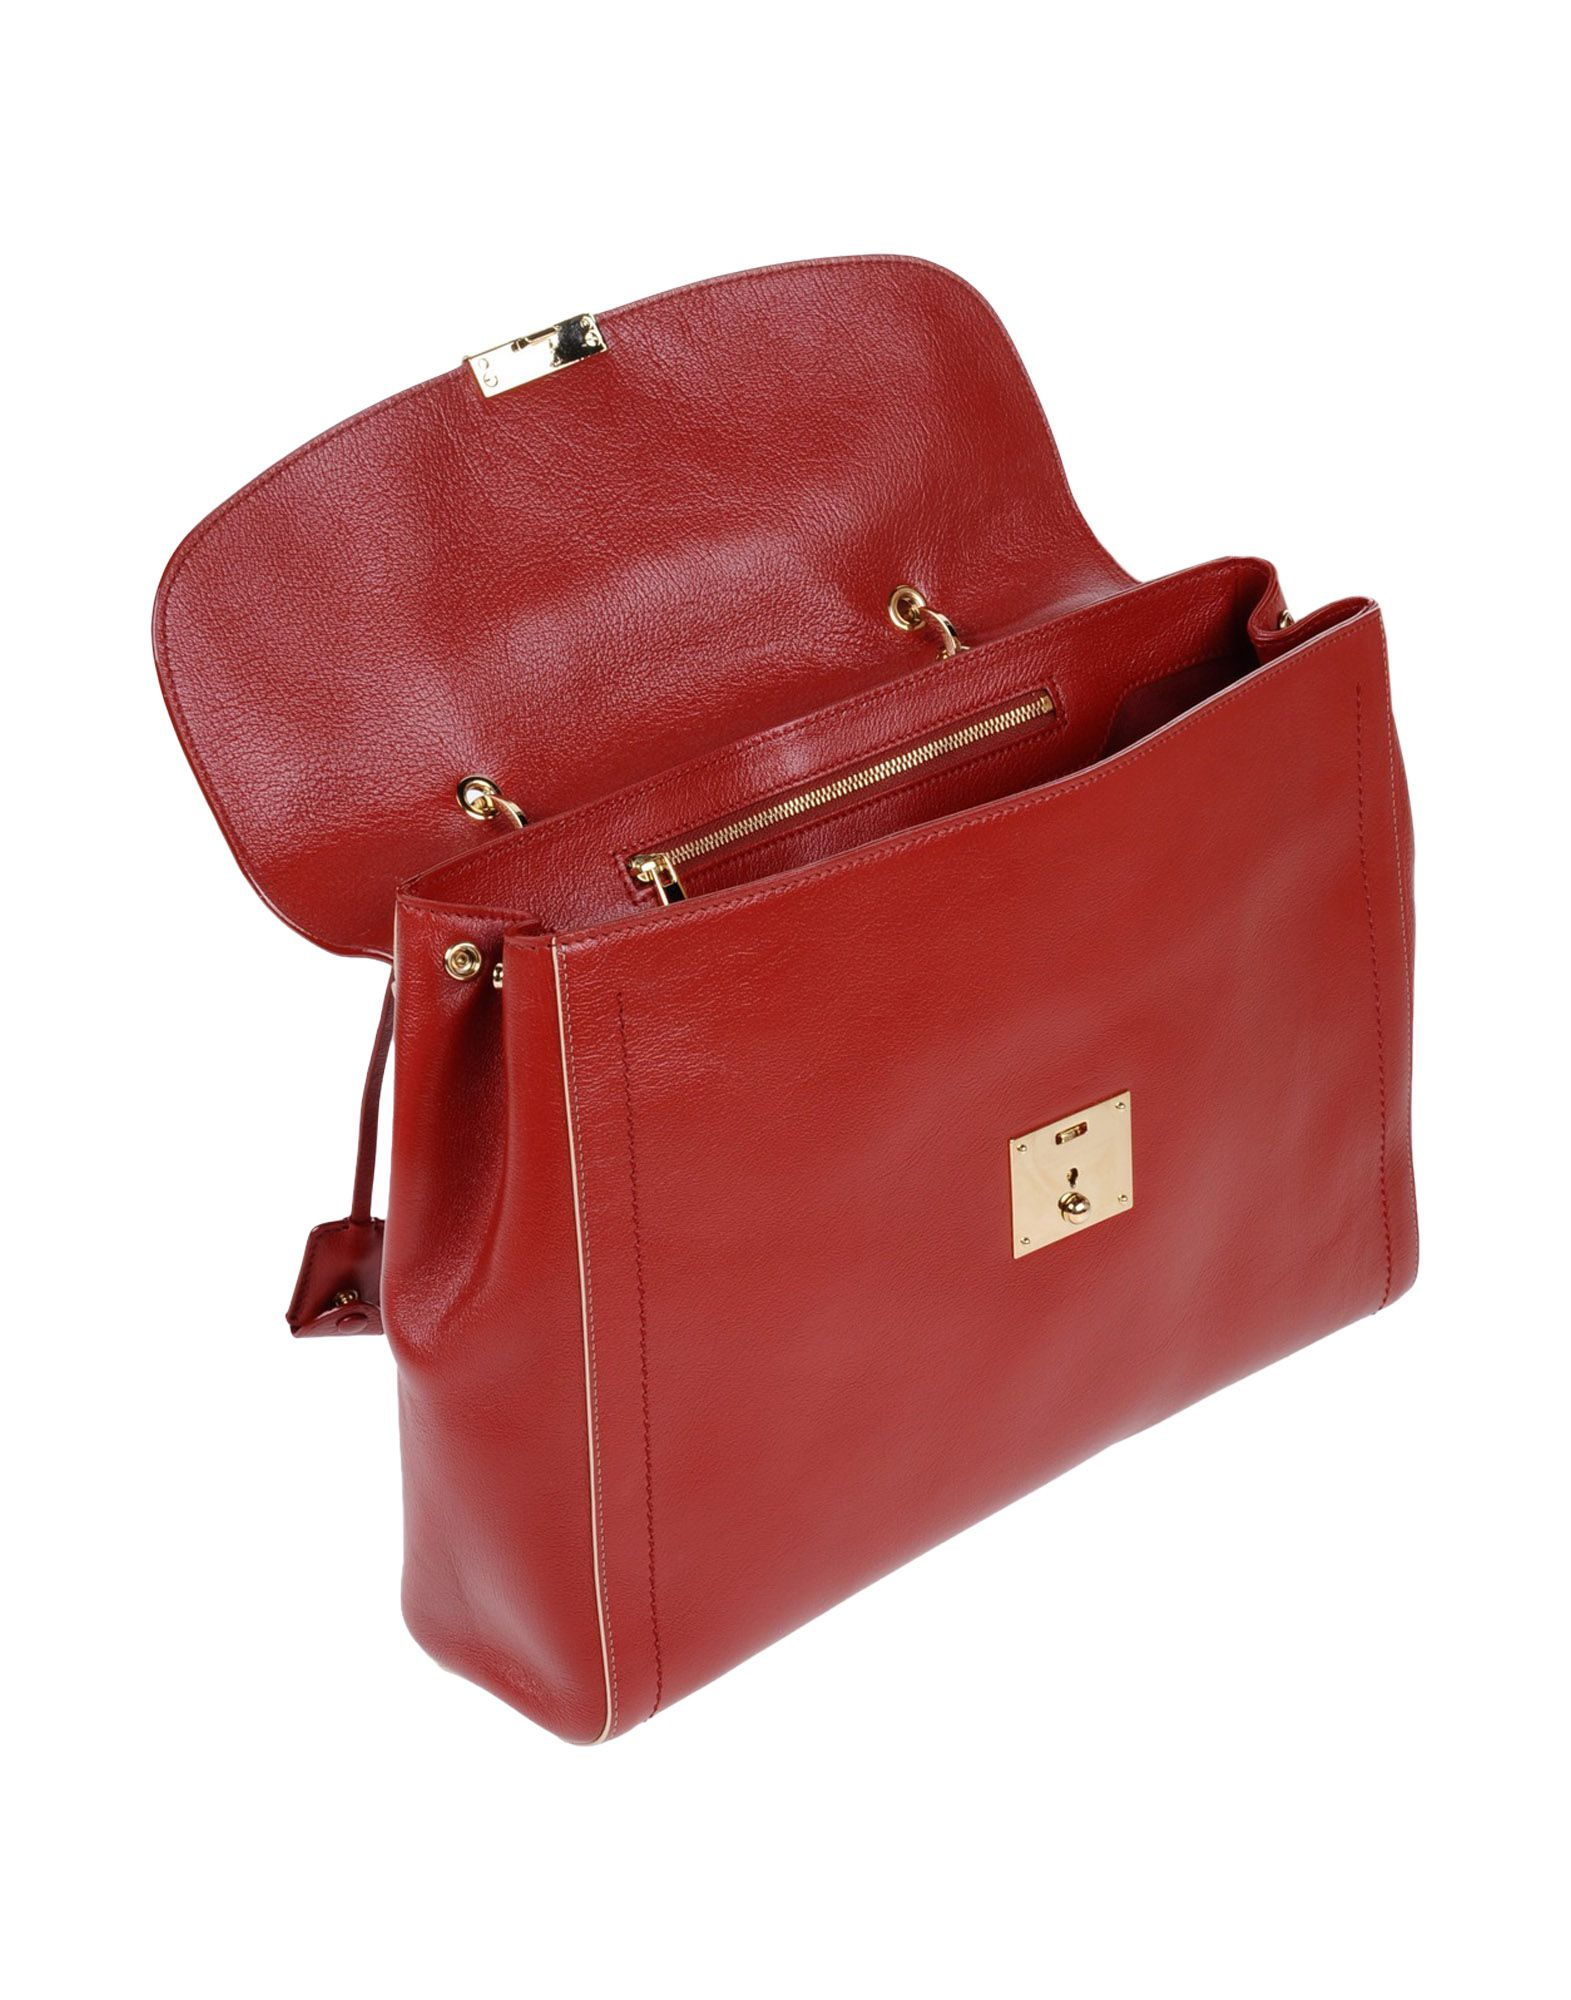 Marc Jacobs Handbag in Red - Lyst